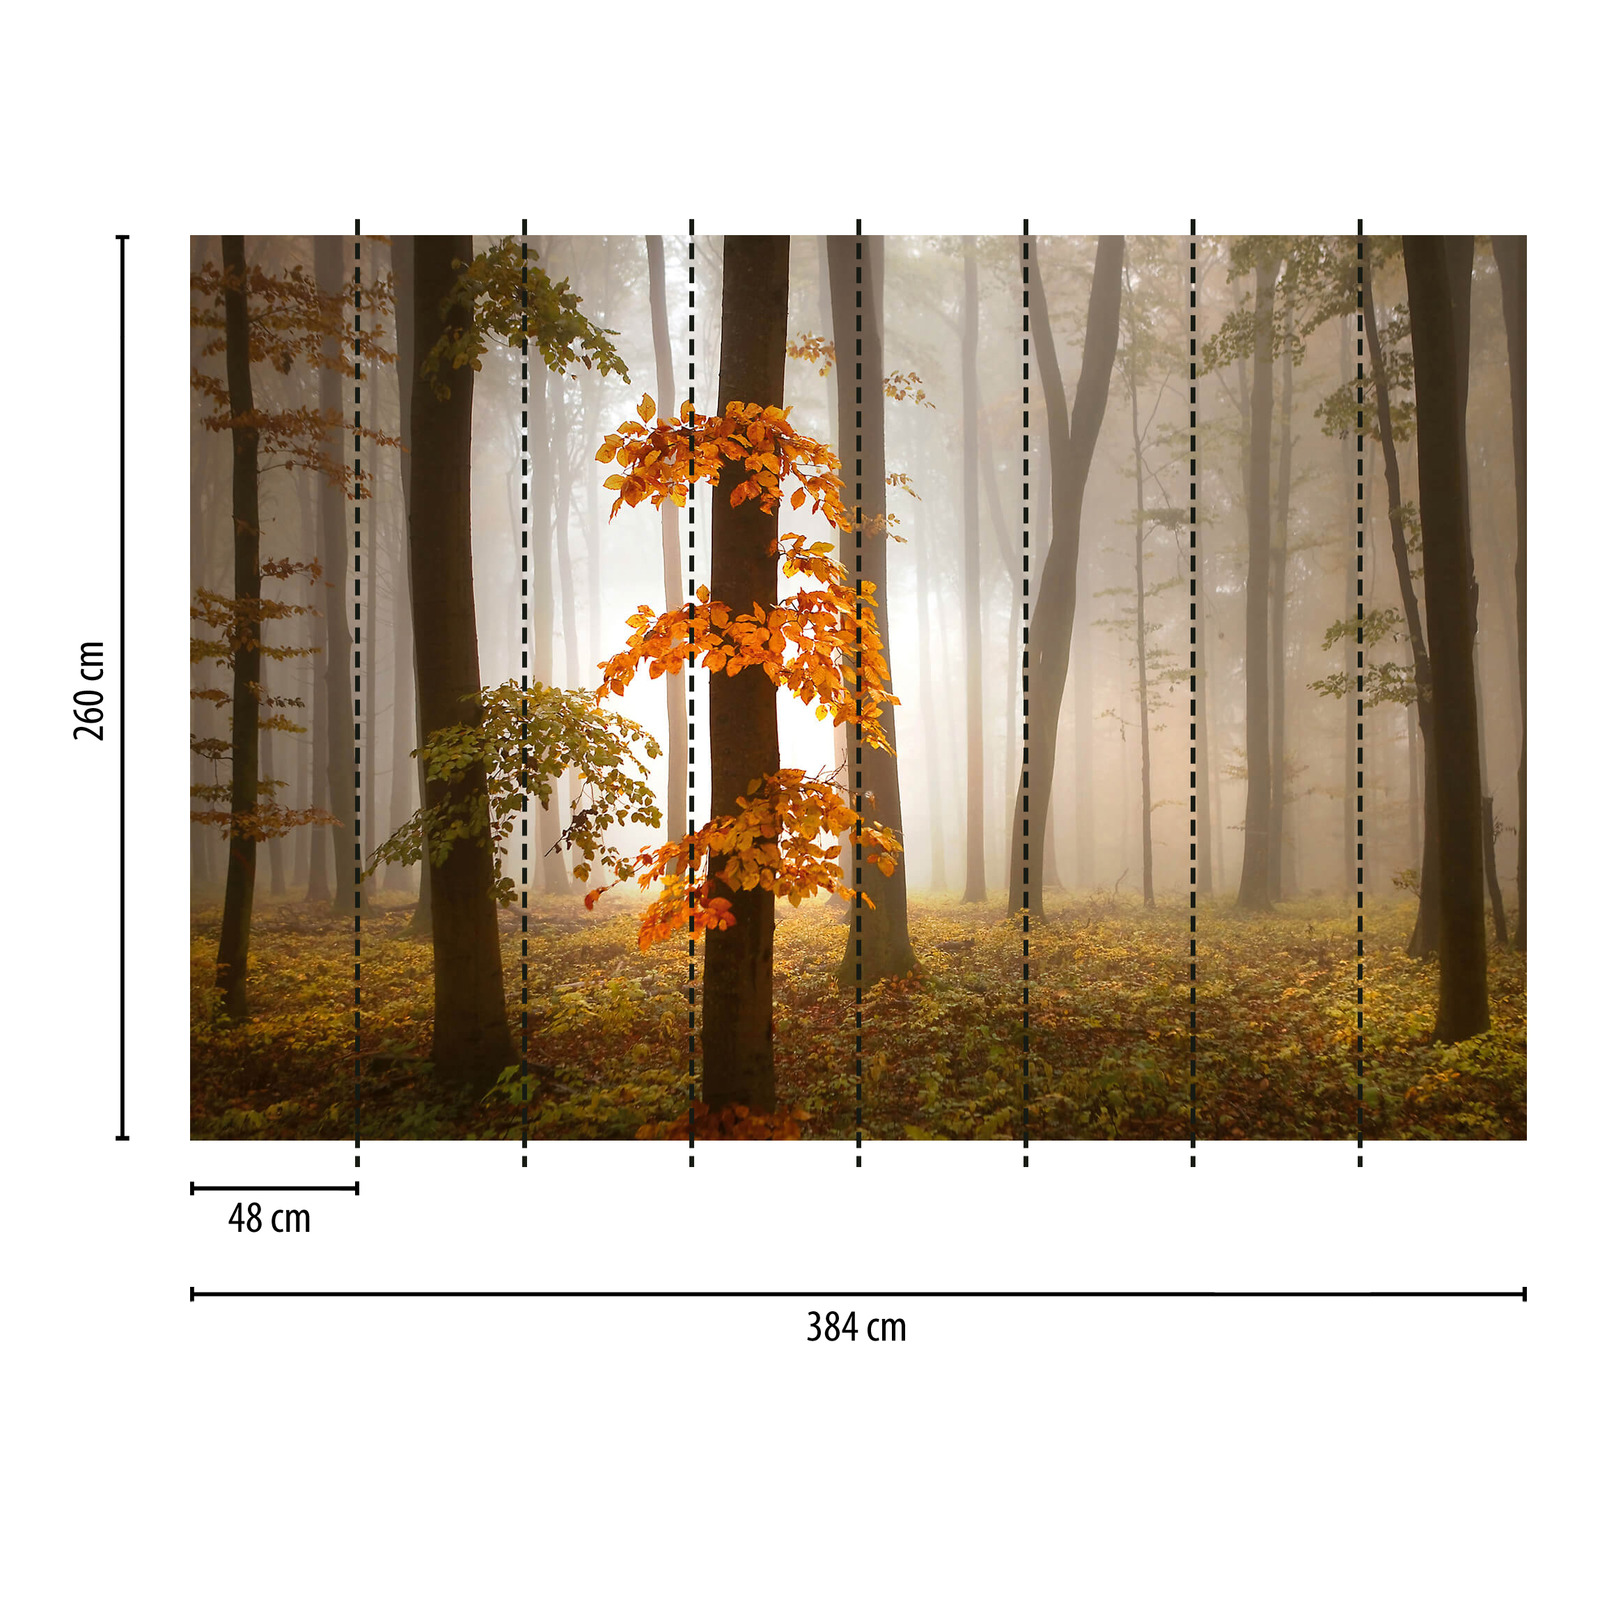             Photo wallpaper forest in autumn with fog - orange, brown
        